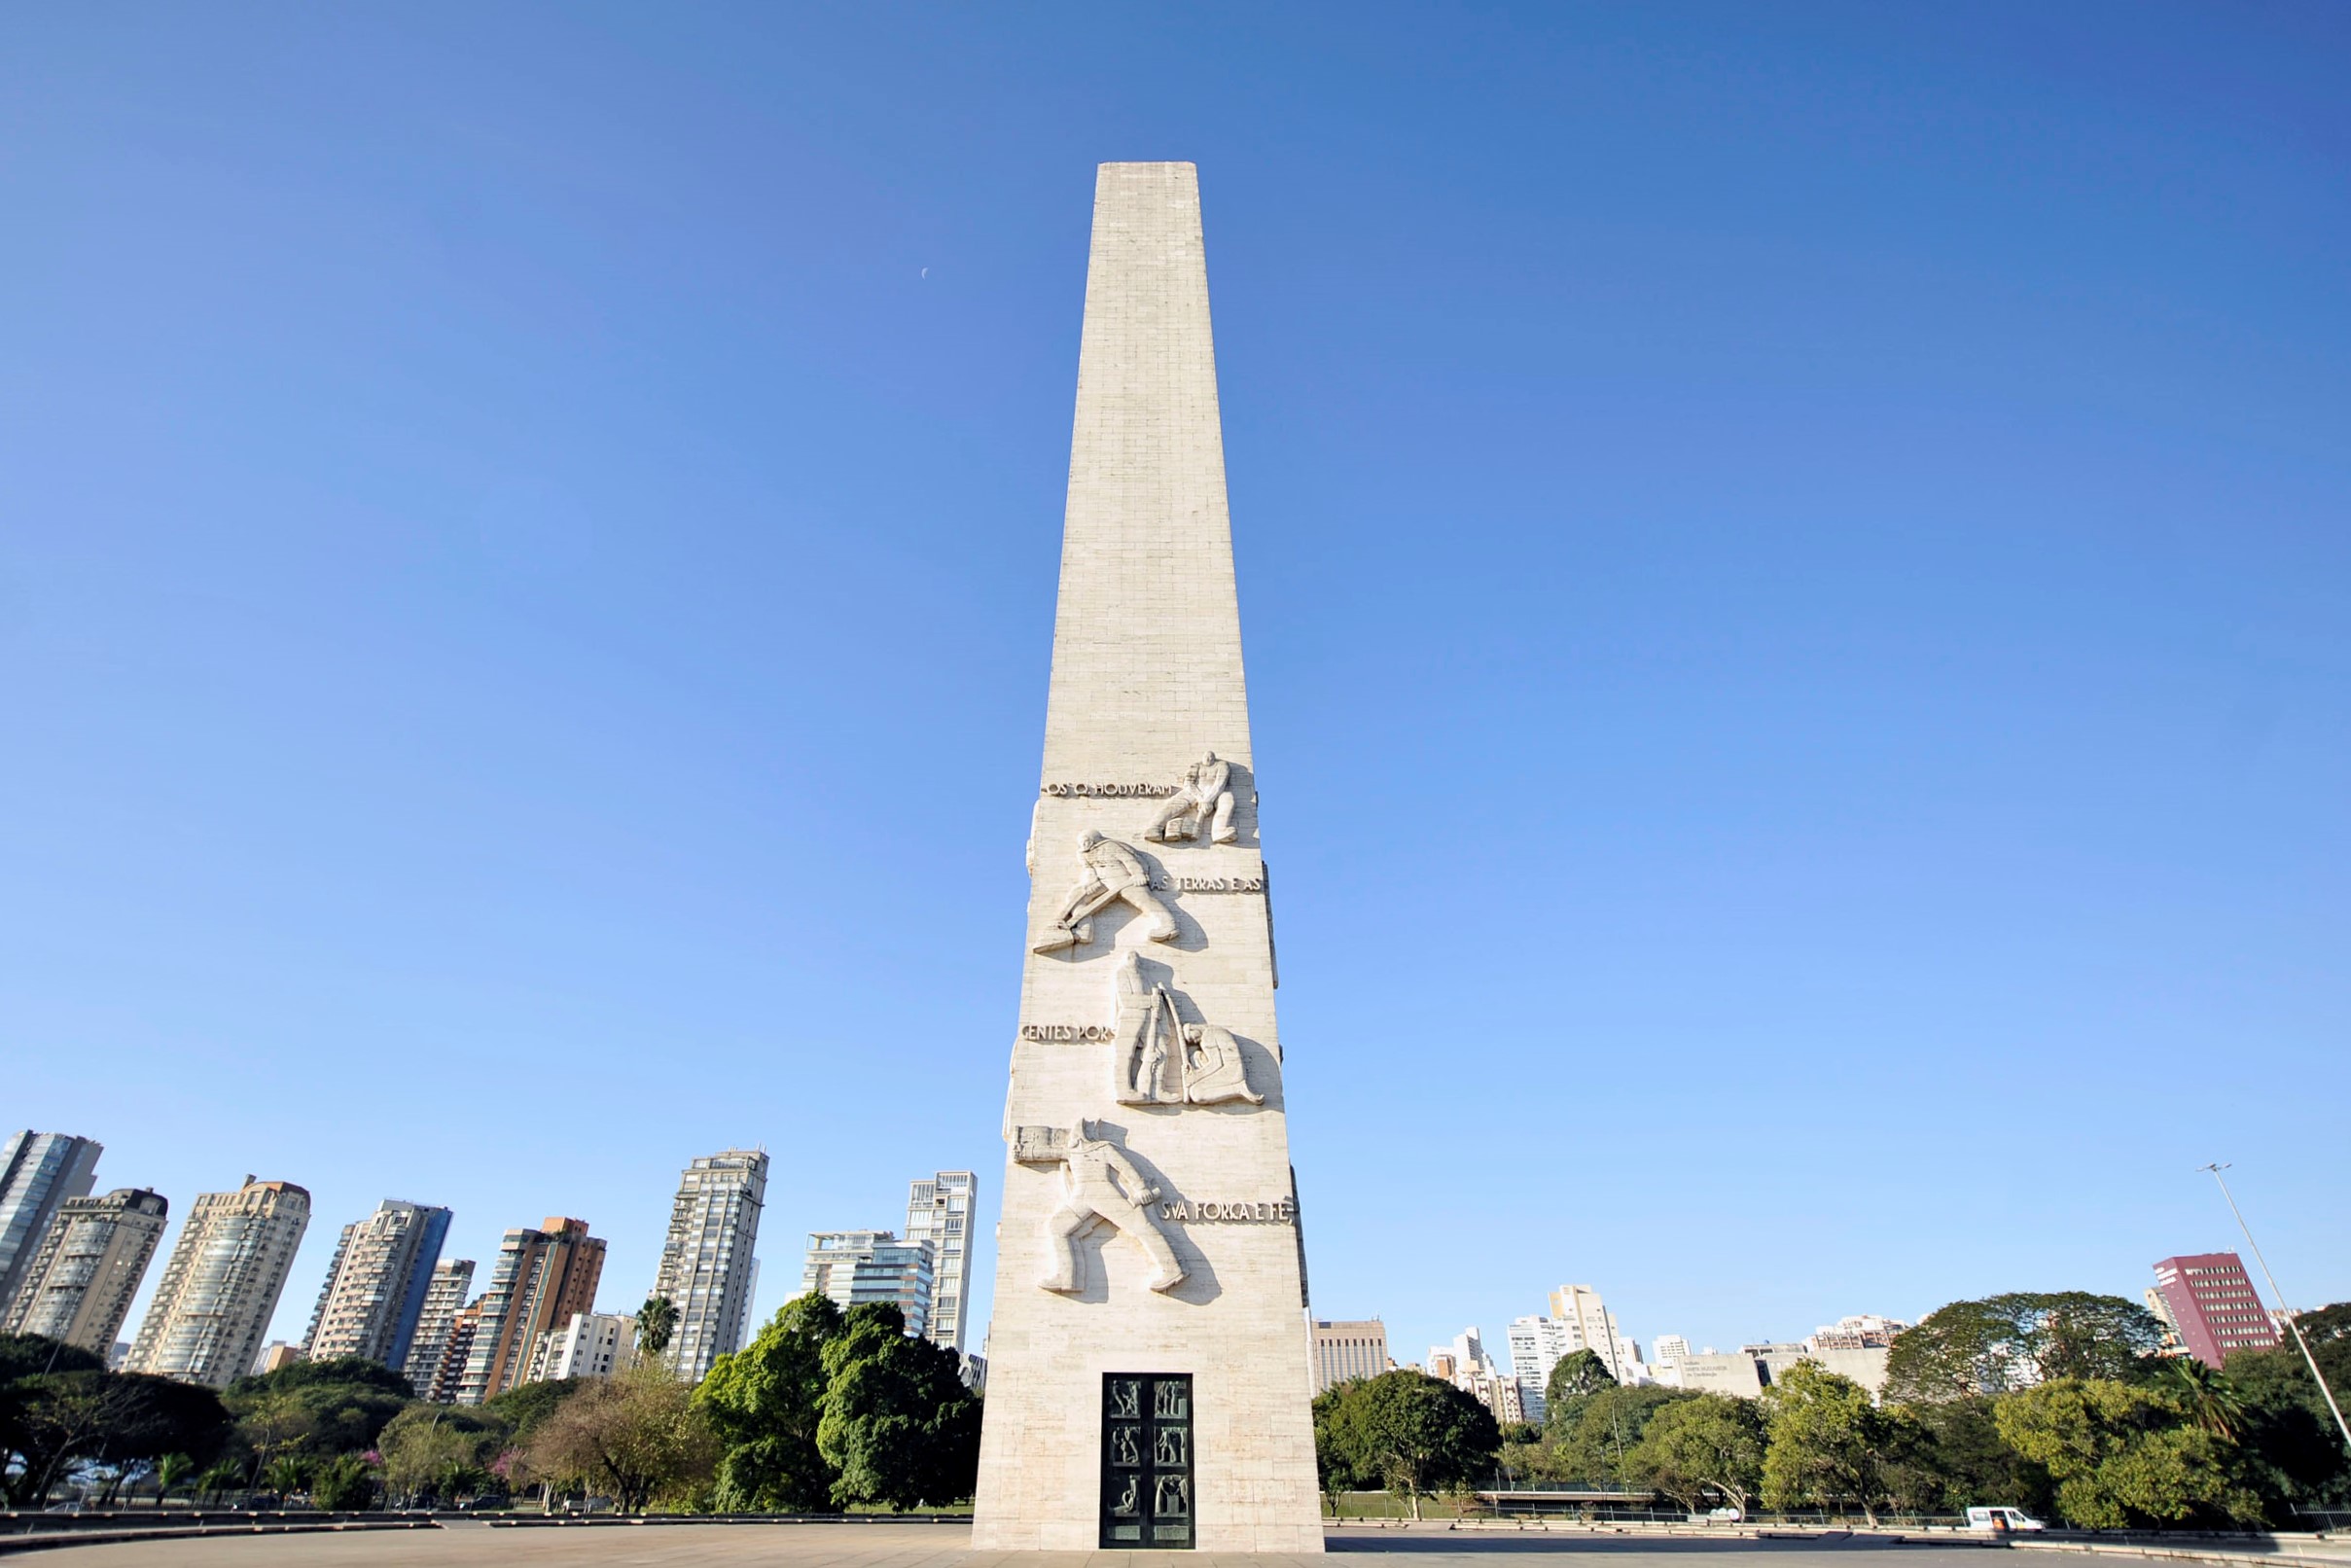 90 anos da Revoluo Constitucionalista de 32 Obelisco no ibirapuera <a style='float:right;color:#ccc' href='https://www3.al.sp.gov.br/repositorio/noticia/N-07-2022/fg289420.jpg' target=_blank><i class='bi bi-zoom-in'></i> Clique para ver a imagem </a>